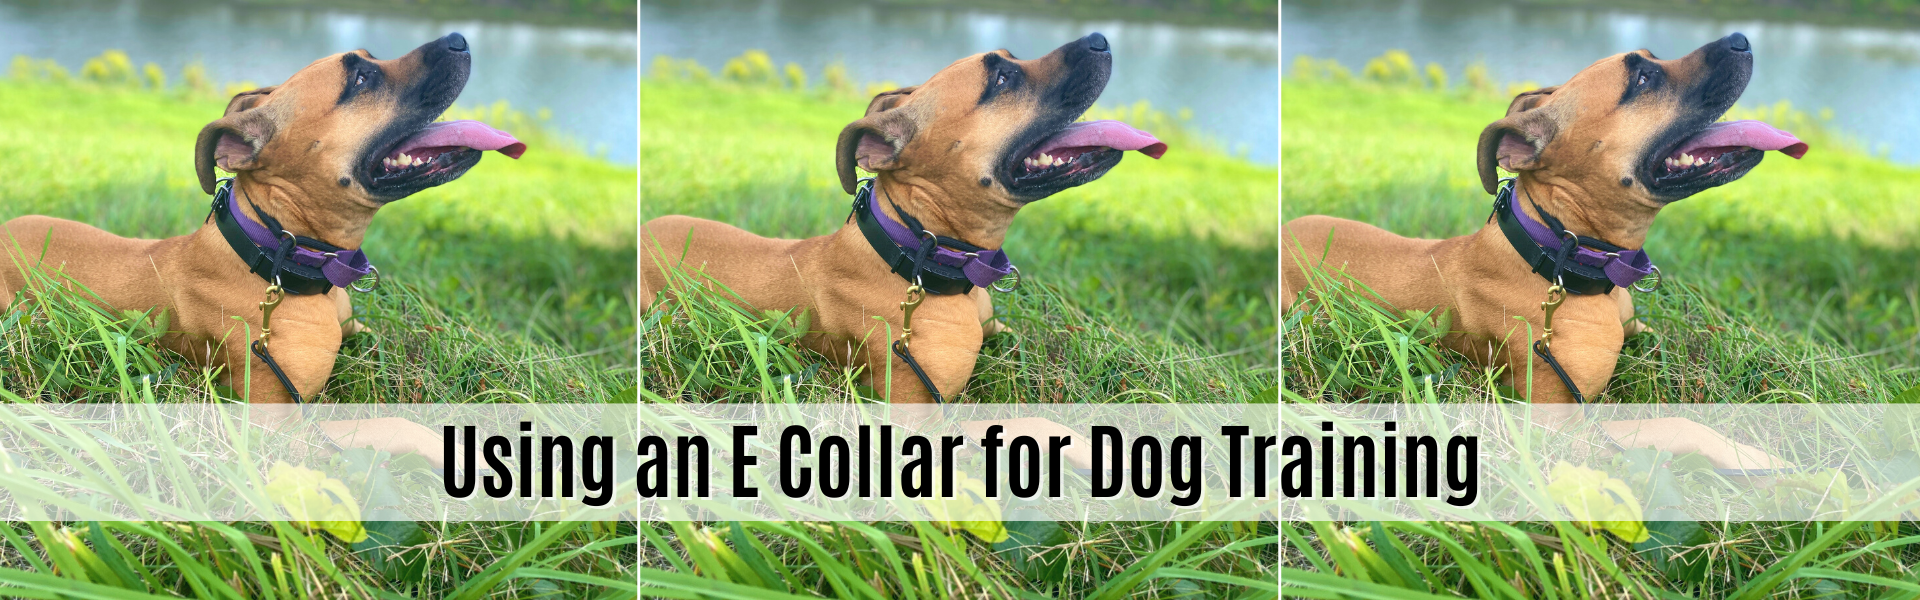 using an e collar for dog training